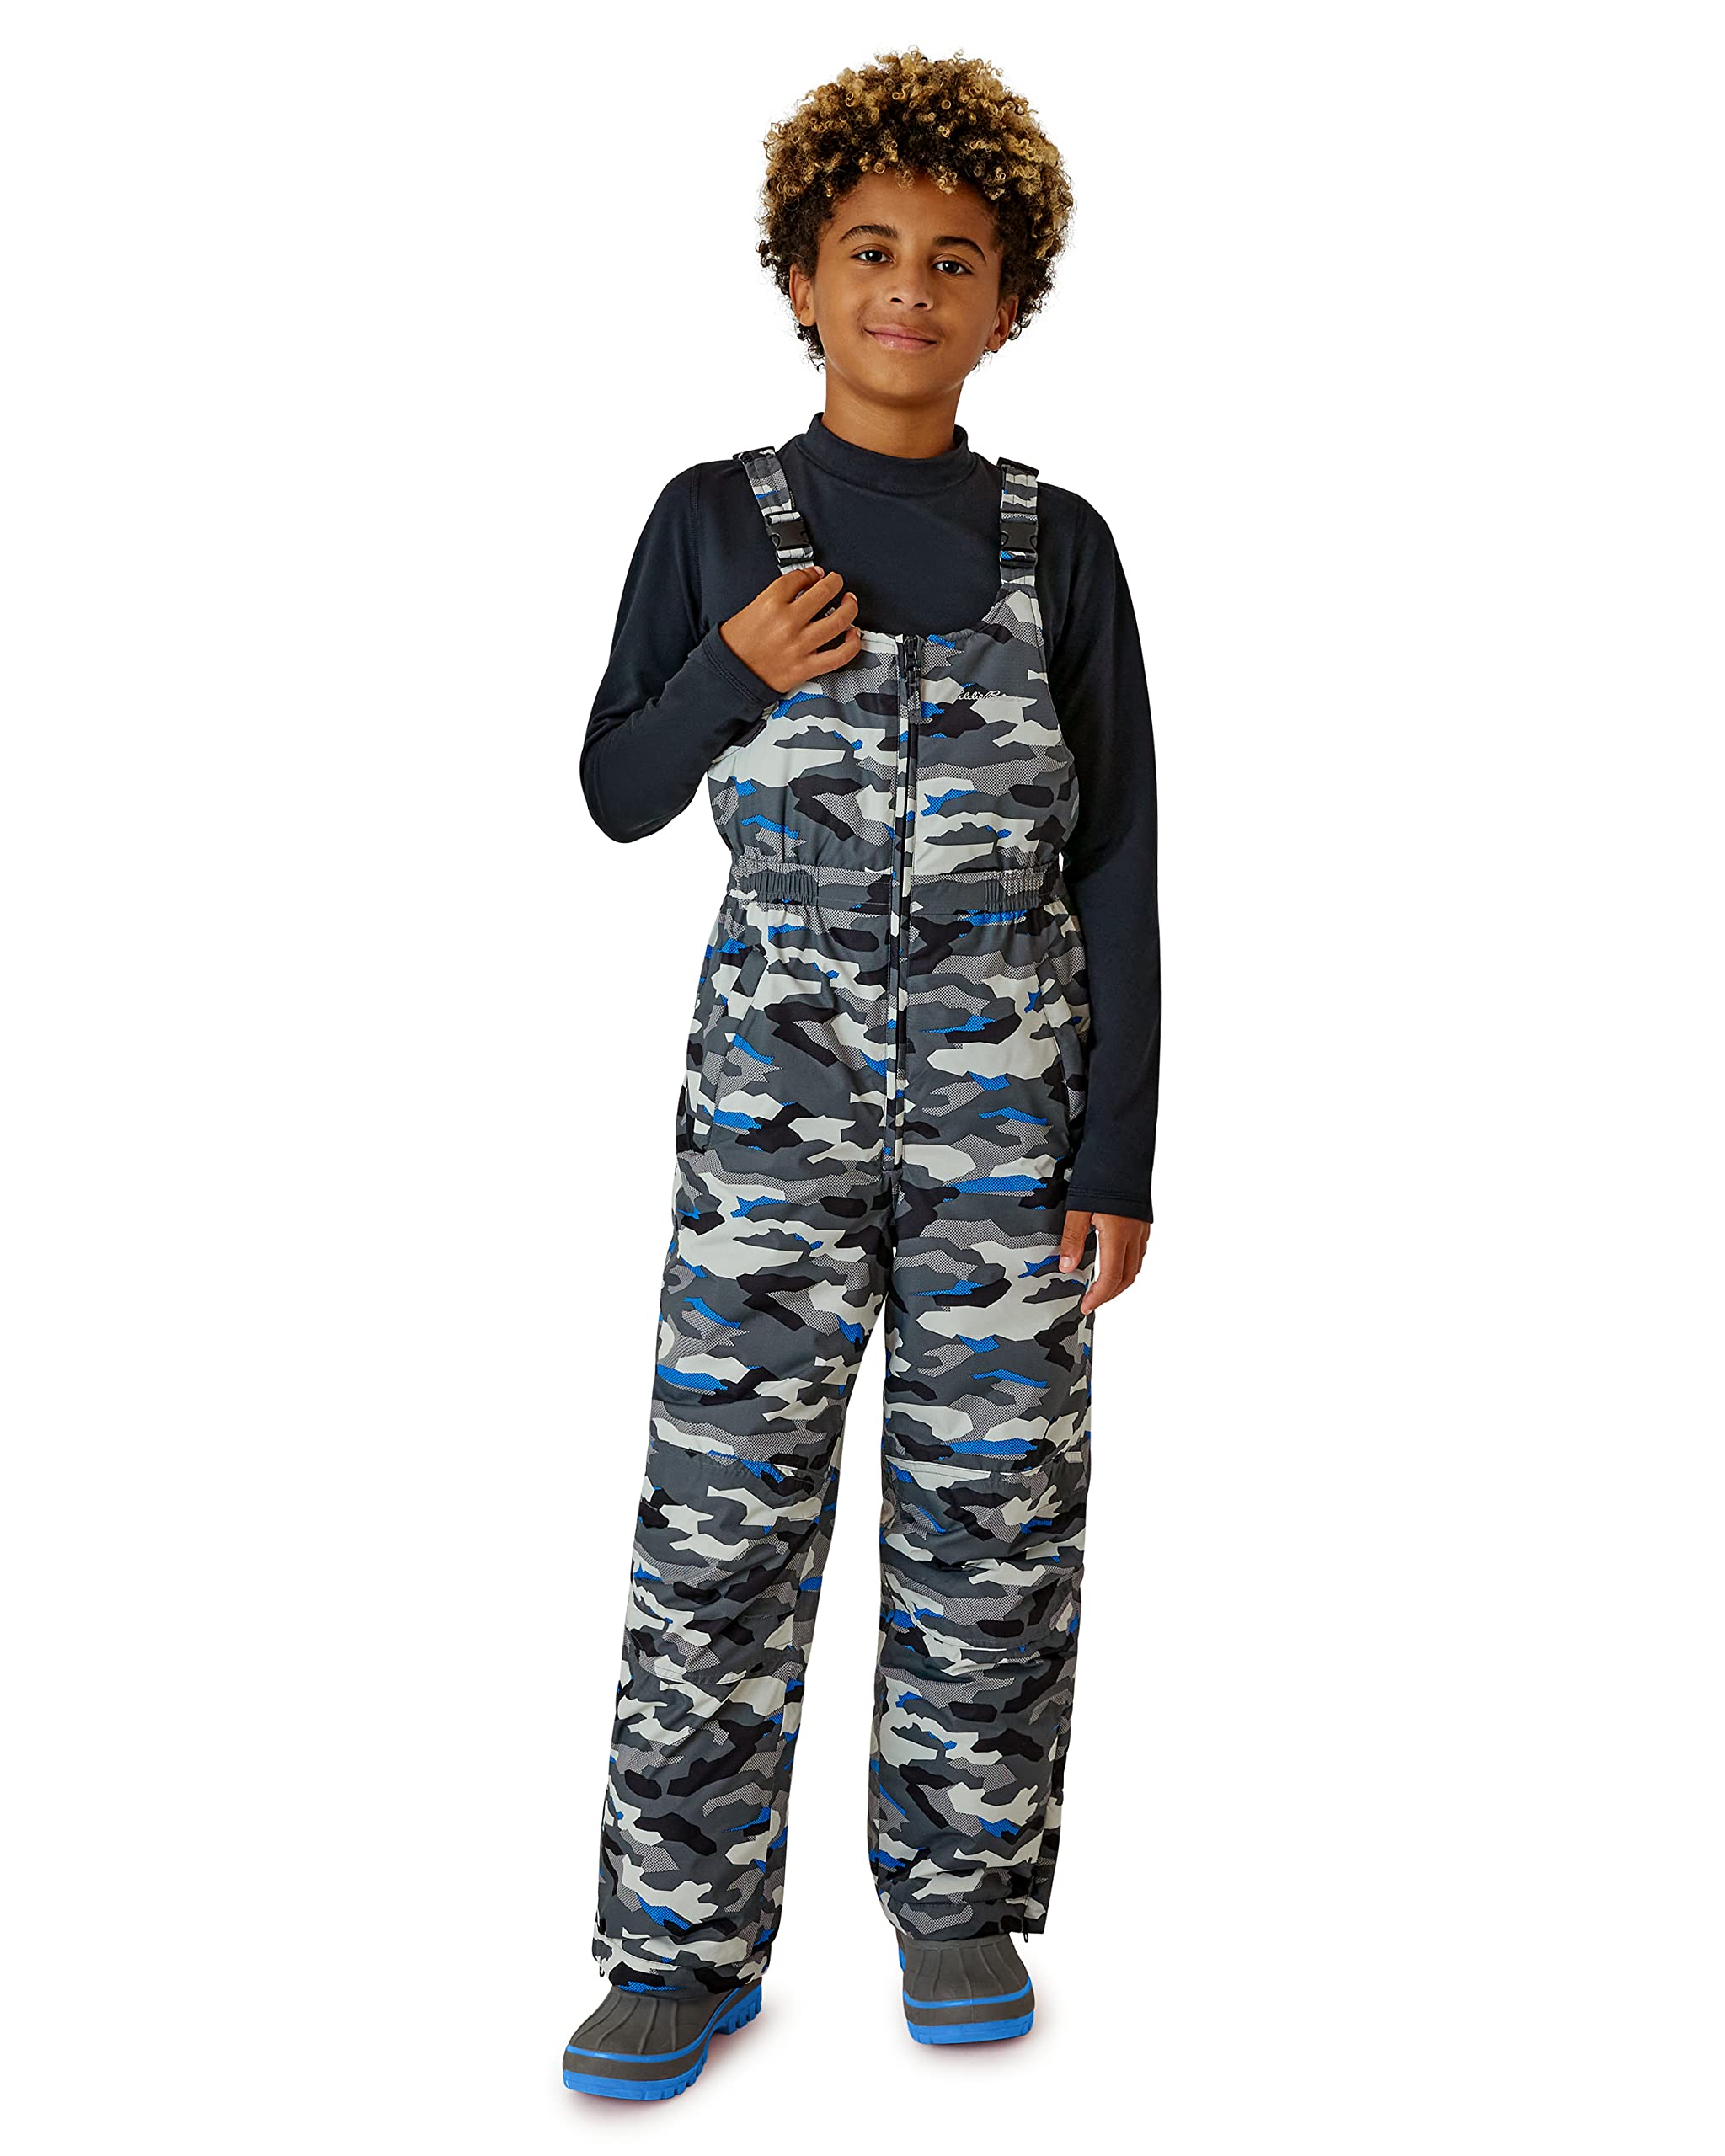 Eddie Bauer Kids Snow Bib - Boys Insulated Waterproof Snow Ski Pant Overalls (3-16), Size 10-12, Grey Blue Camo